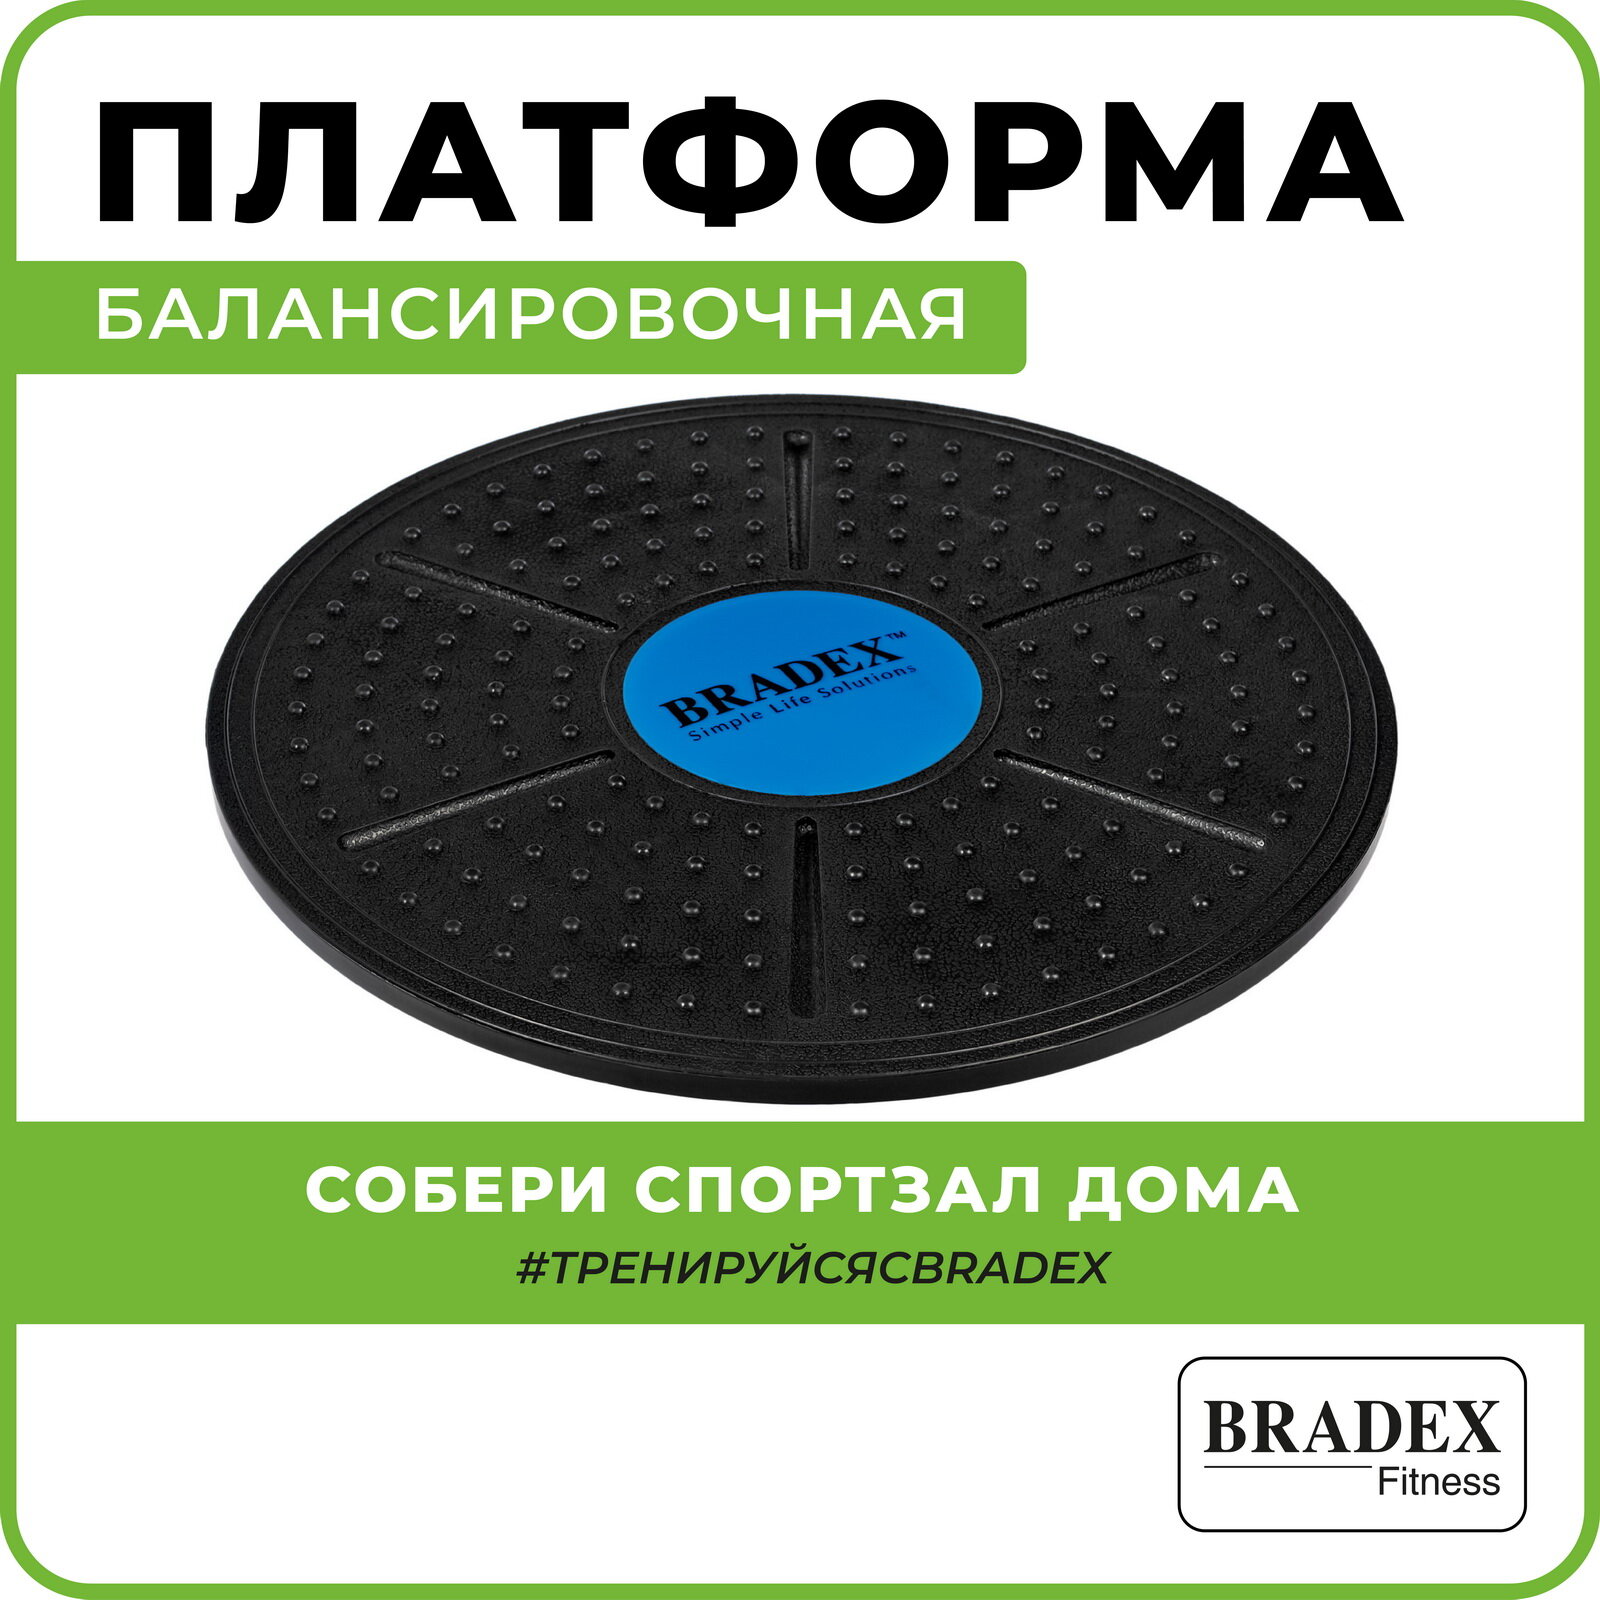 Баланс борд балансировочная доска платформа BRADEX